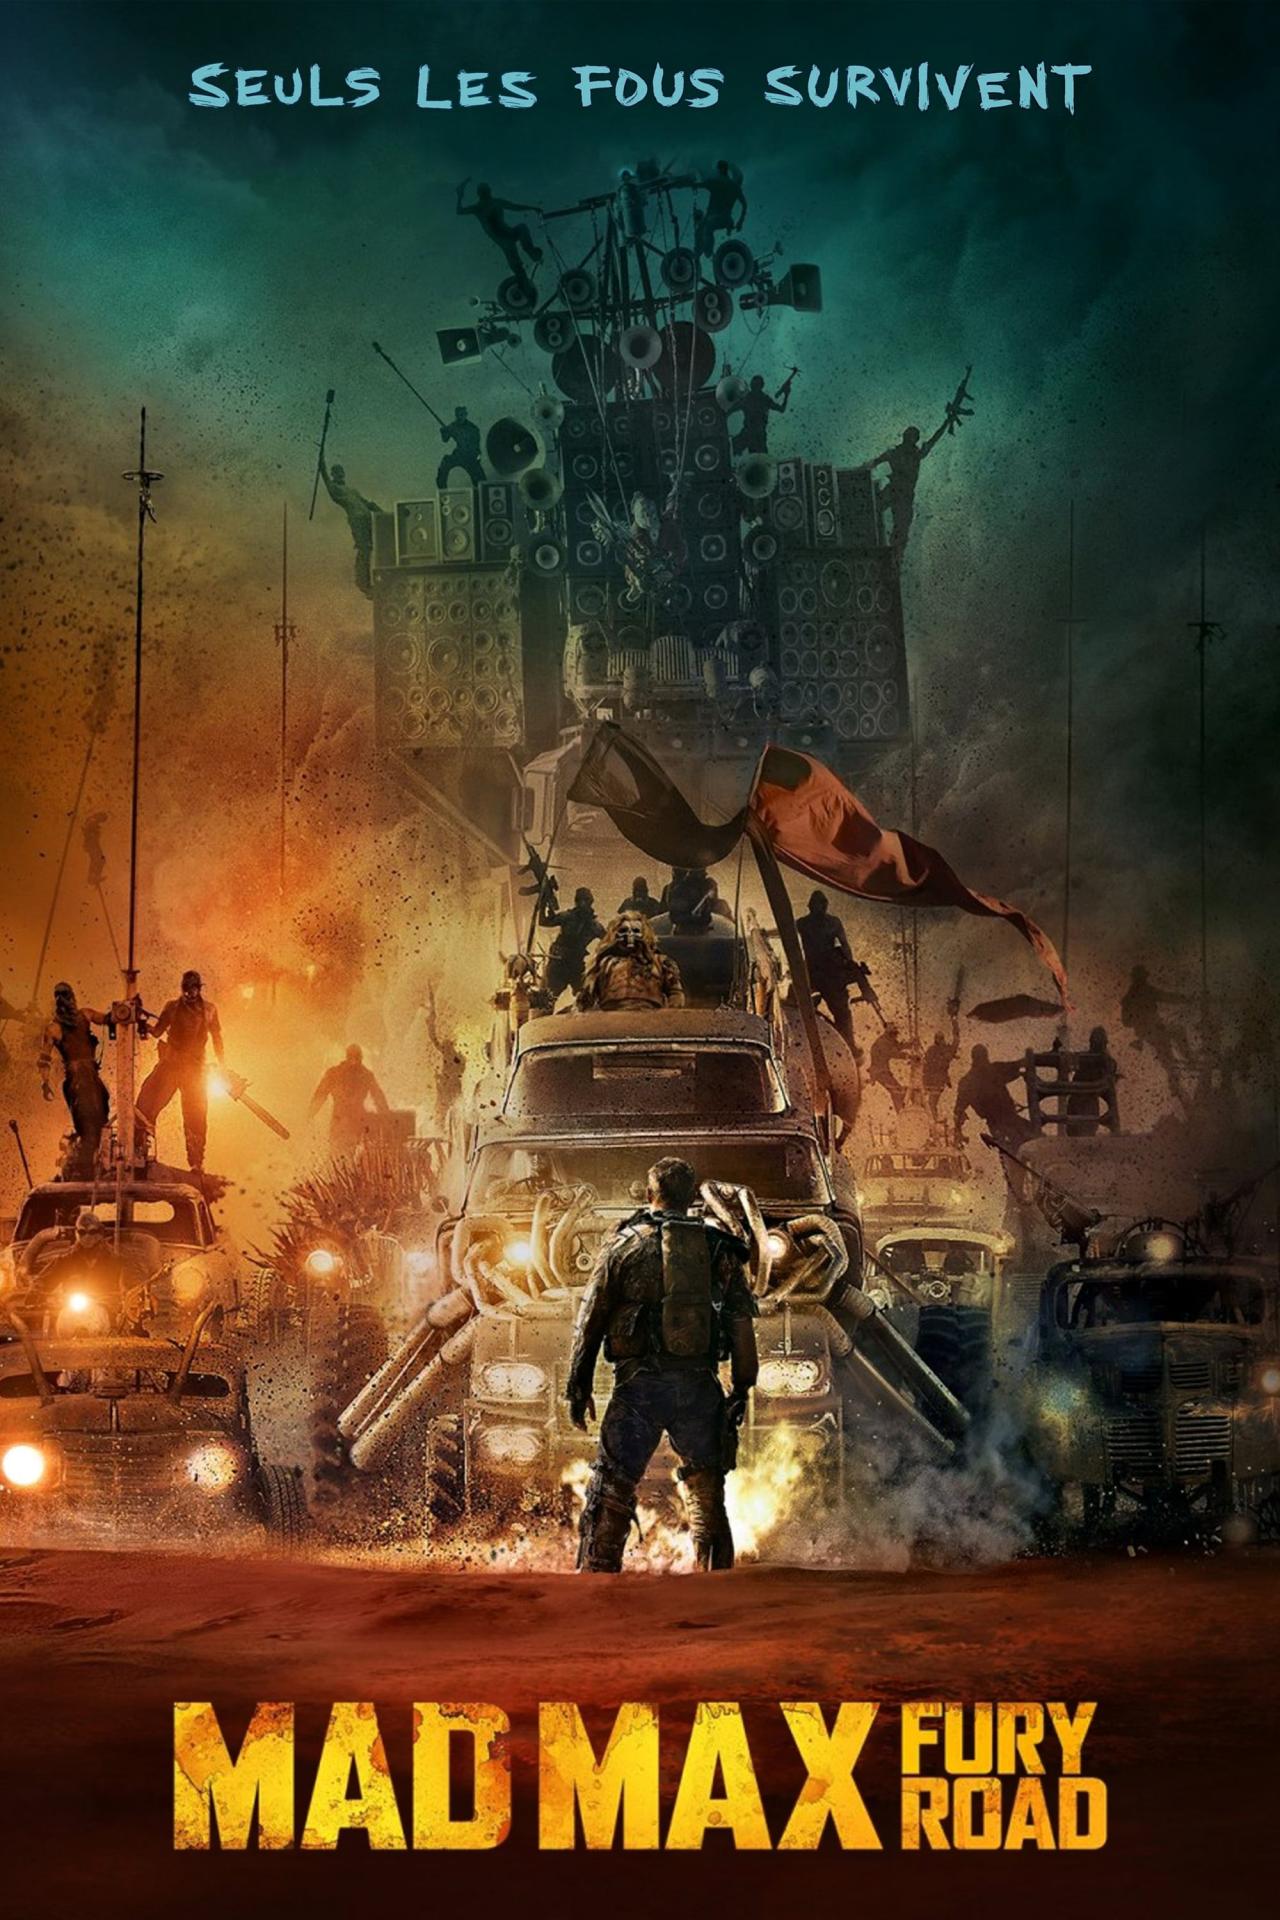 Affiche du film Mad Max : Fury Road